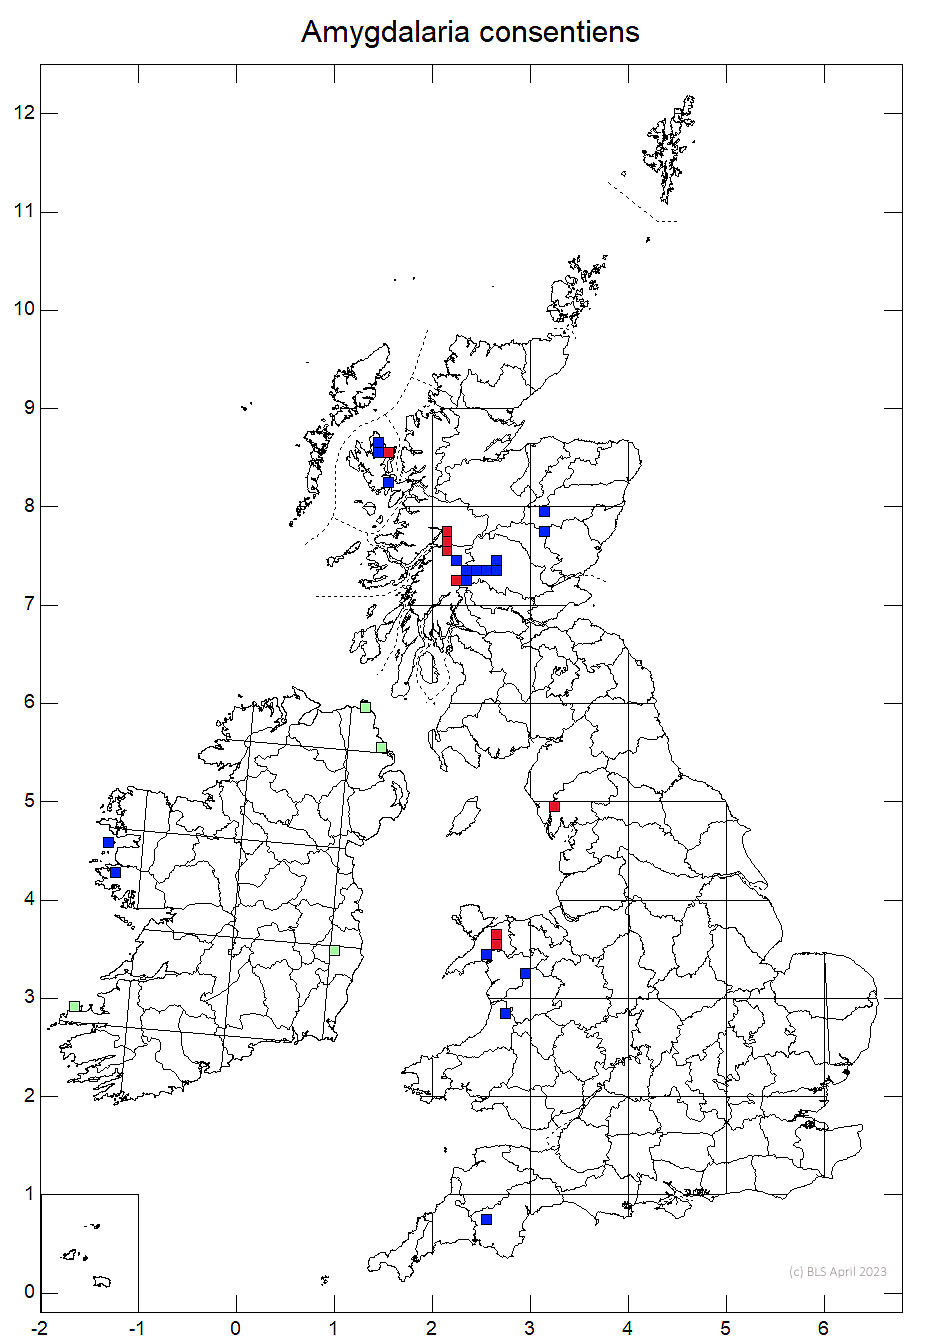 Amygdalaria consentiens 10km sq distribution map